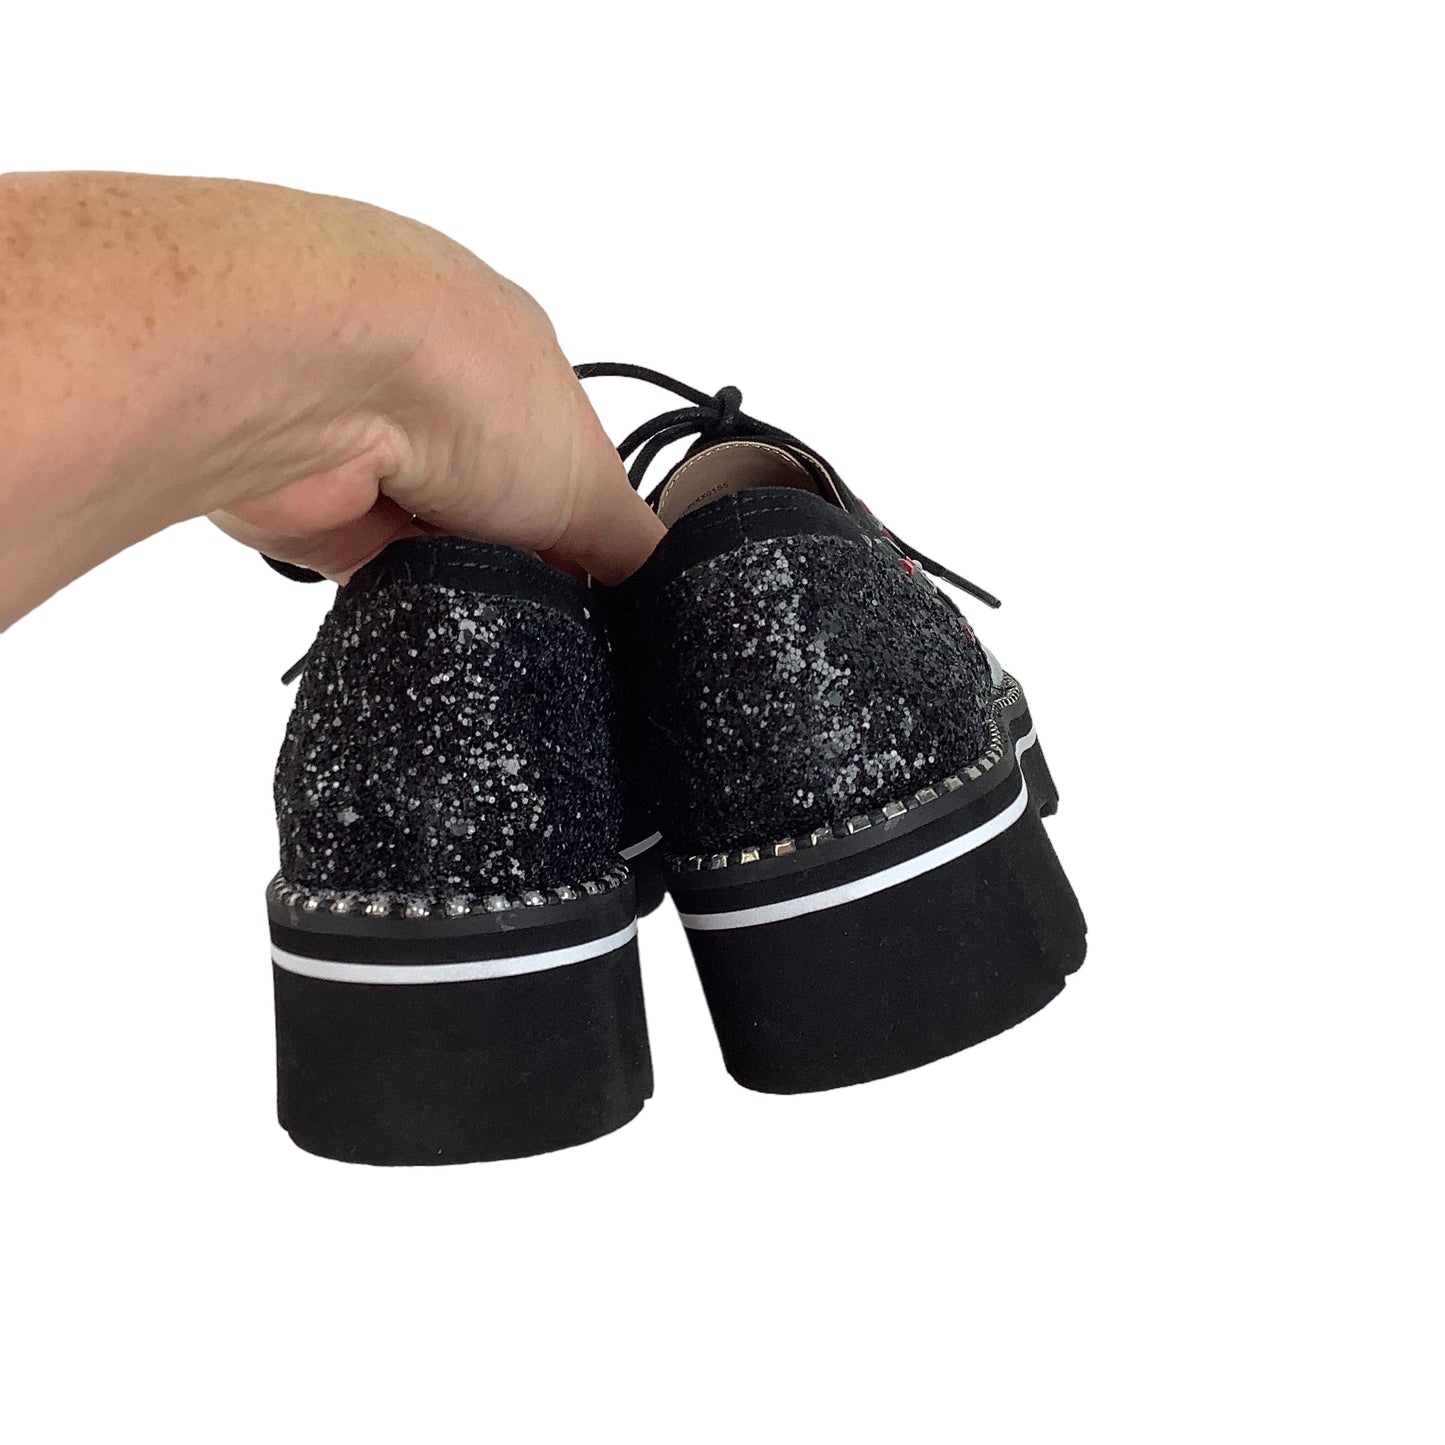 Black Shoes Flats Betsey Johnson, Size 7.5